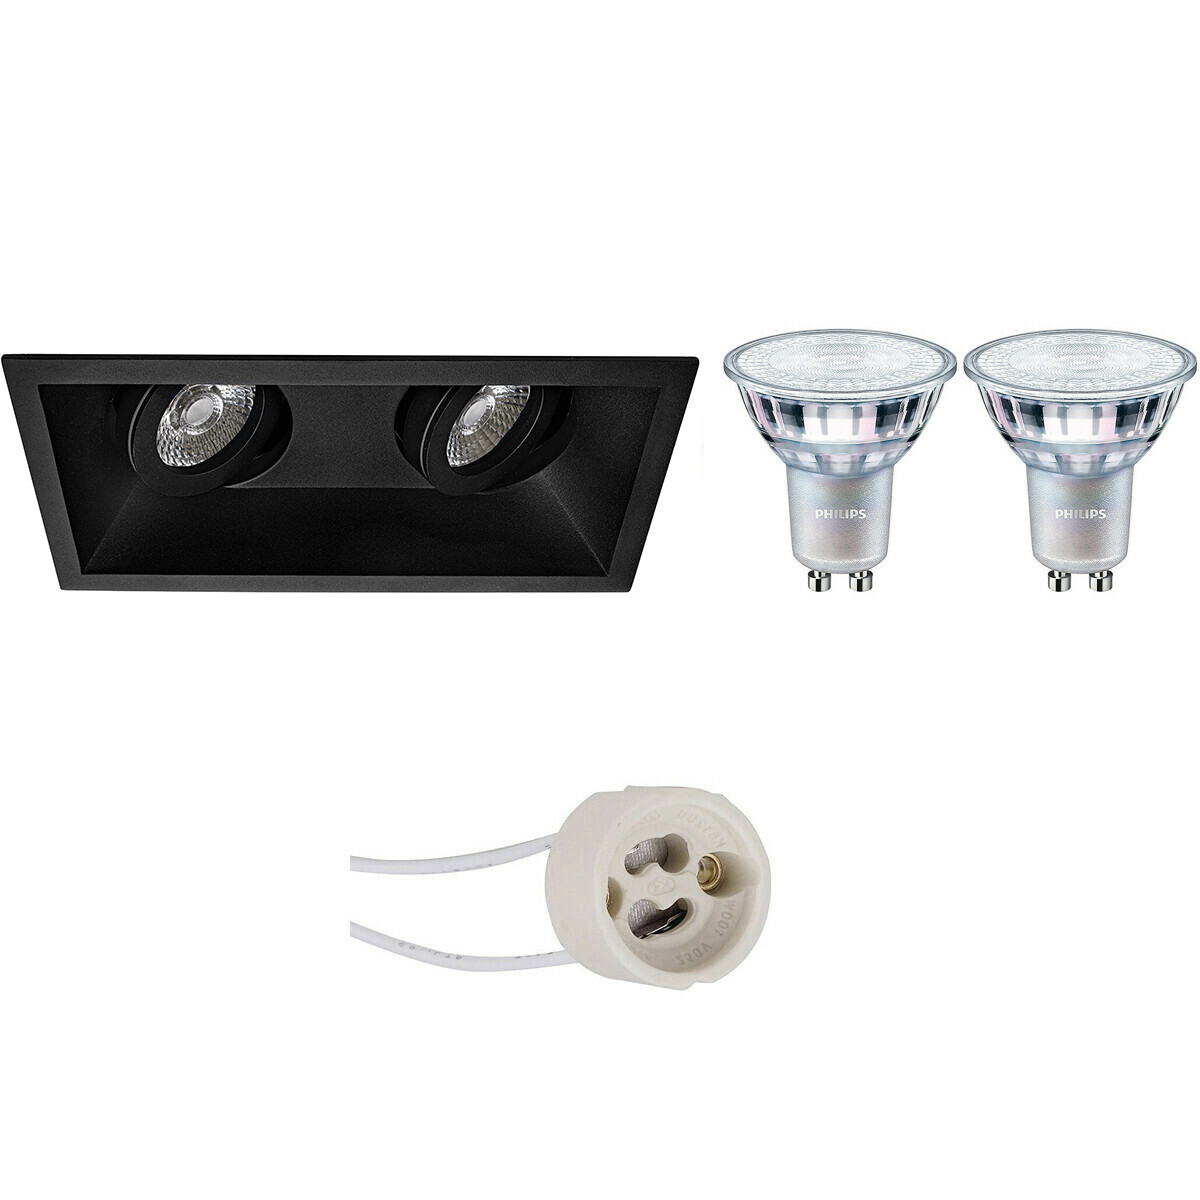 LED Spot Set - Pragmi Zano Pro - GU10 Fitting - Inbouw Rechthoek Dubbel - Mat Zwart - Kantelbaar - 185x93mm - Philips - MASTER 927 36D VLE - 4.9W - Warm Wit 2200K-2700K - DimTone Dimbaar product afbeelding